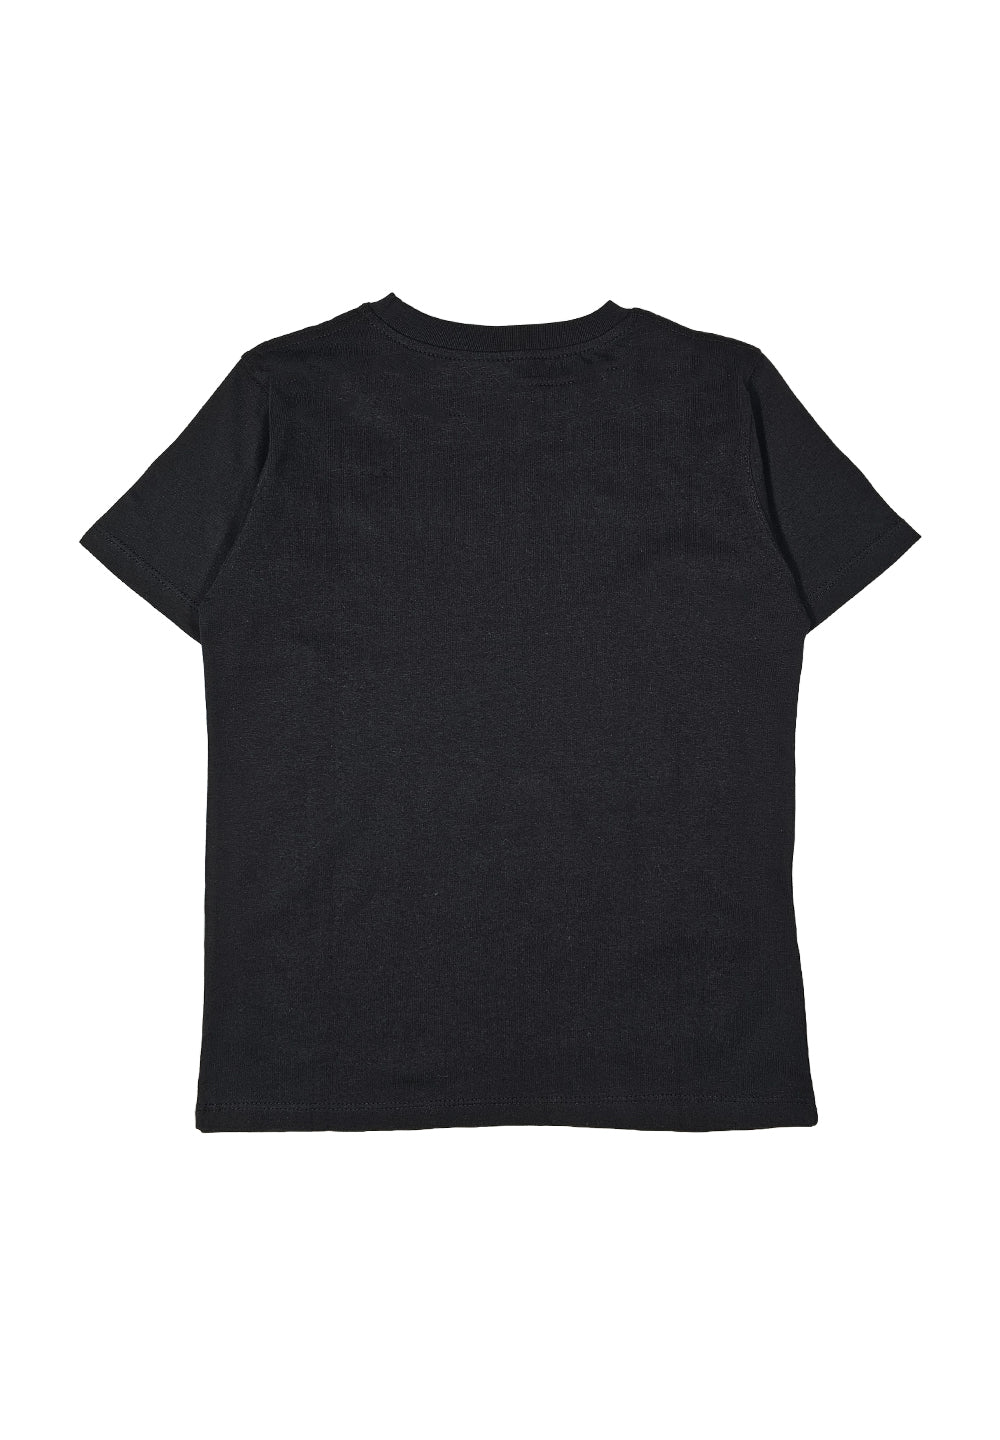 T-shirt nera per bambino